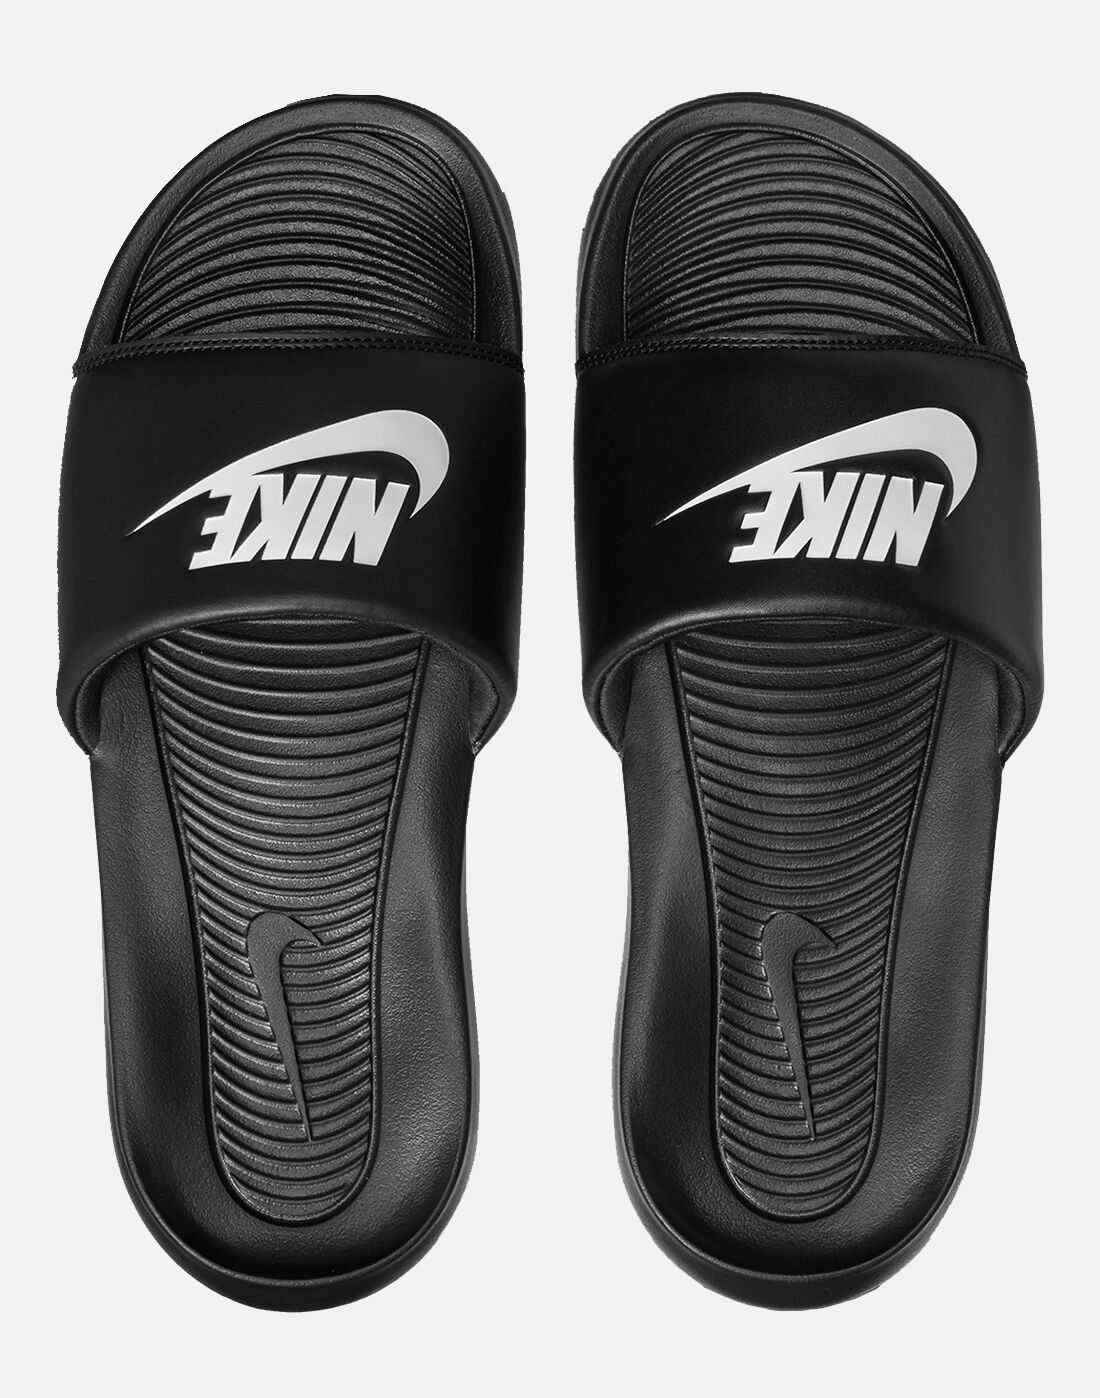 Buy > edgars adidas sandals > in stock